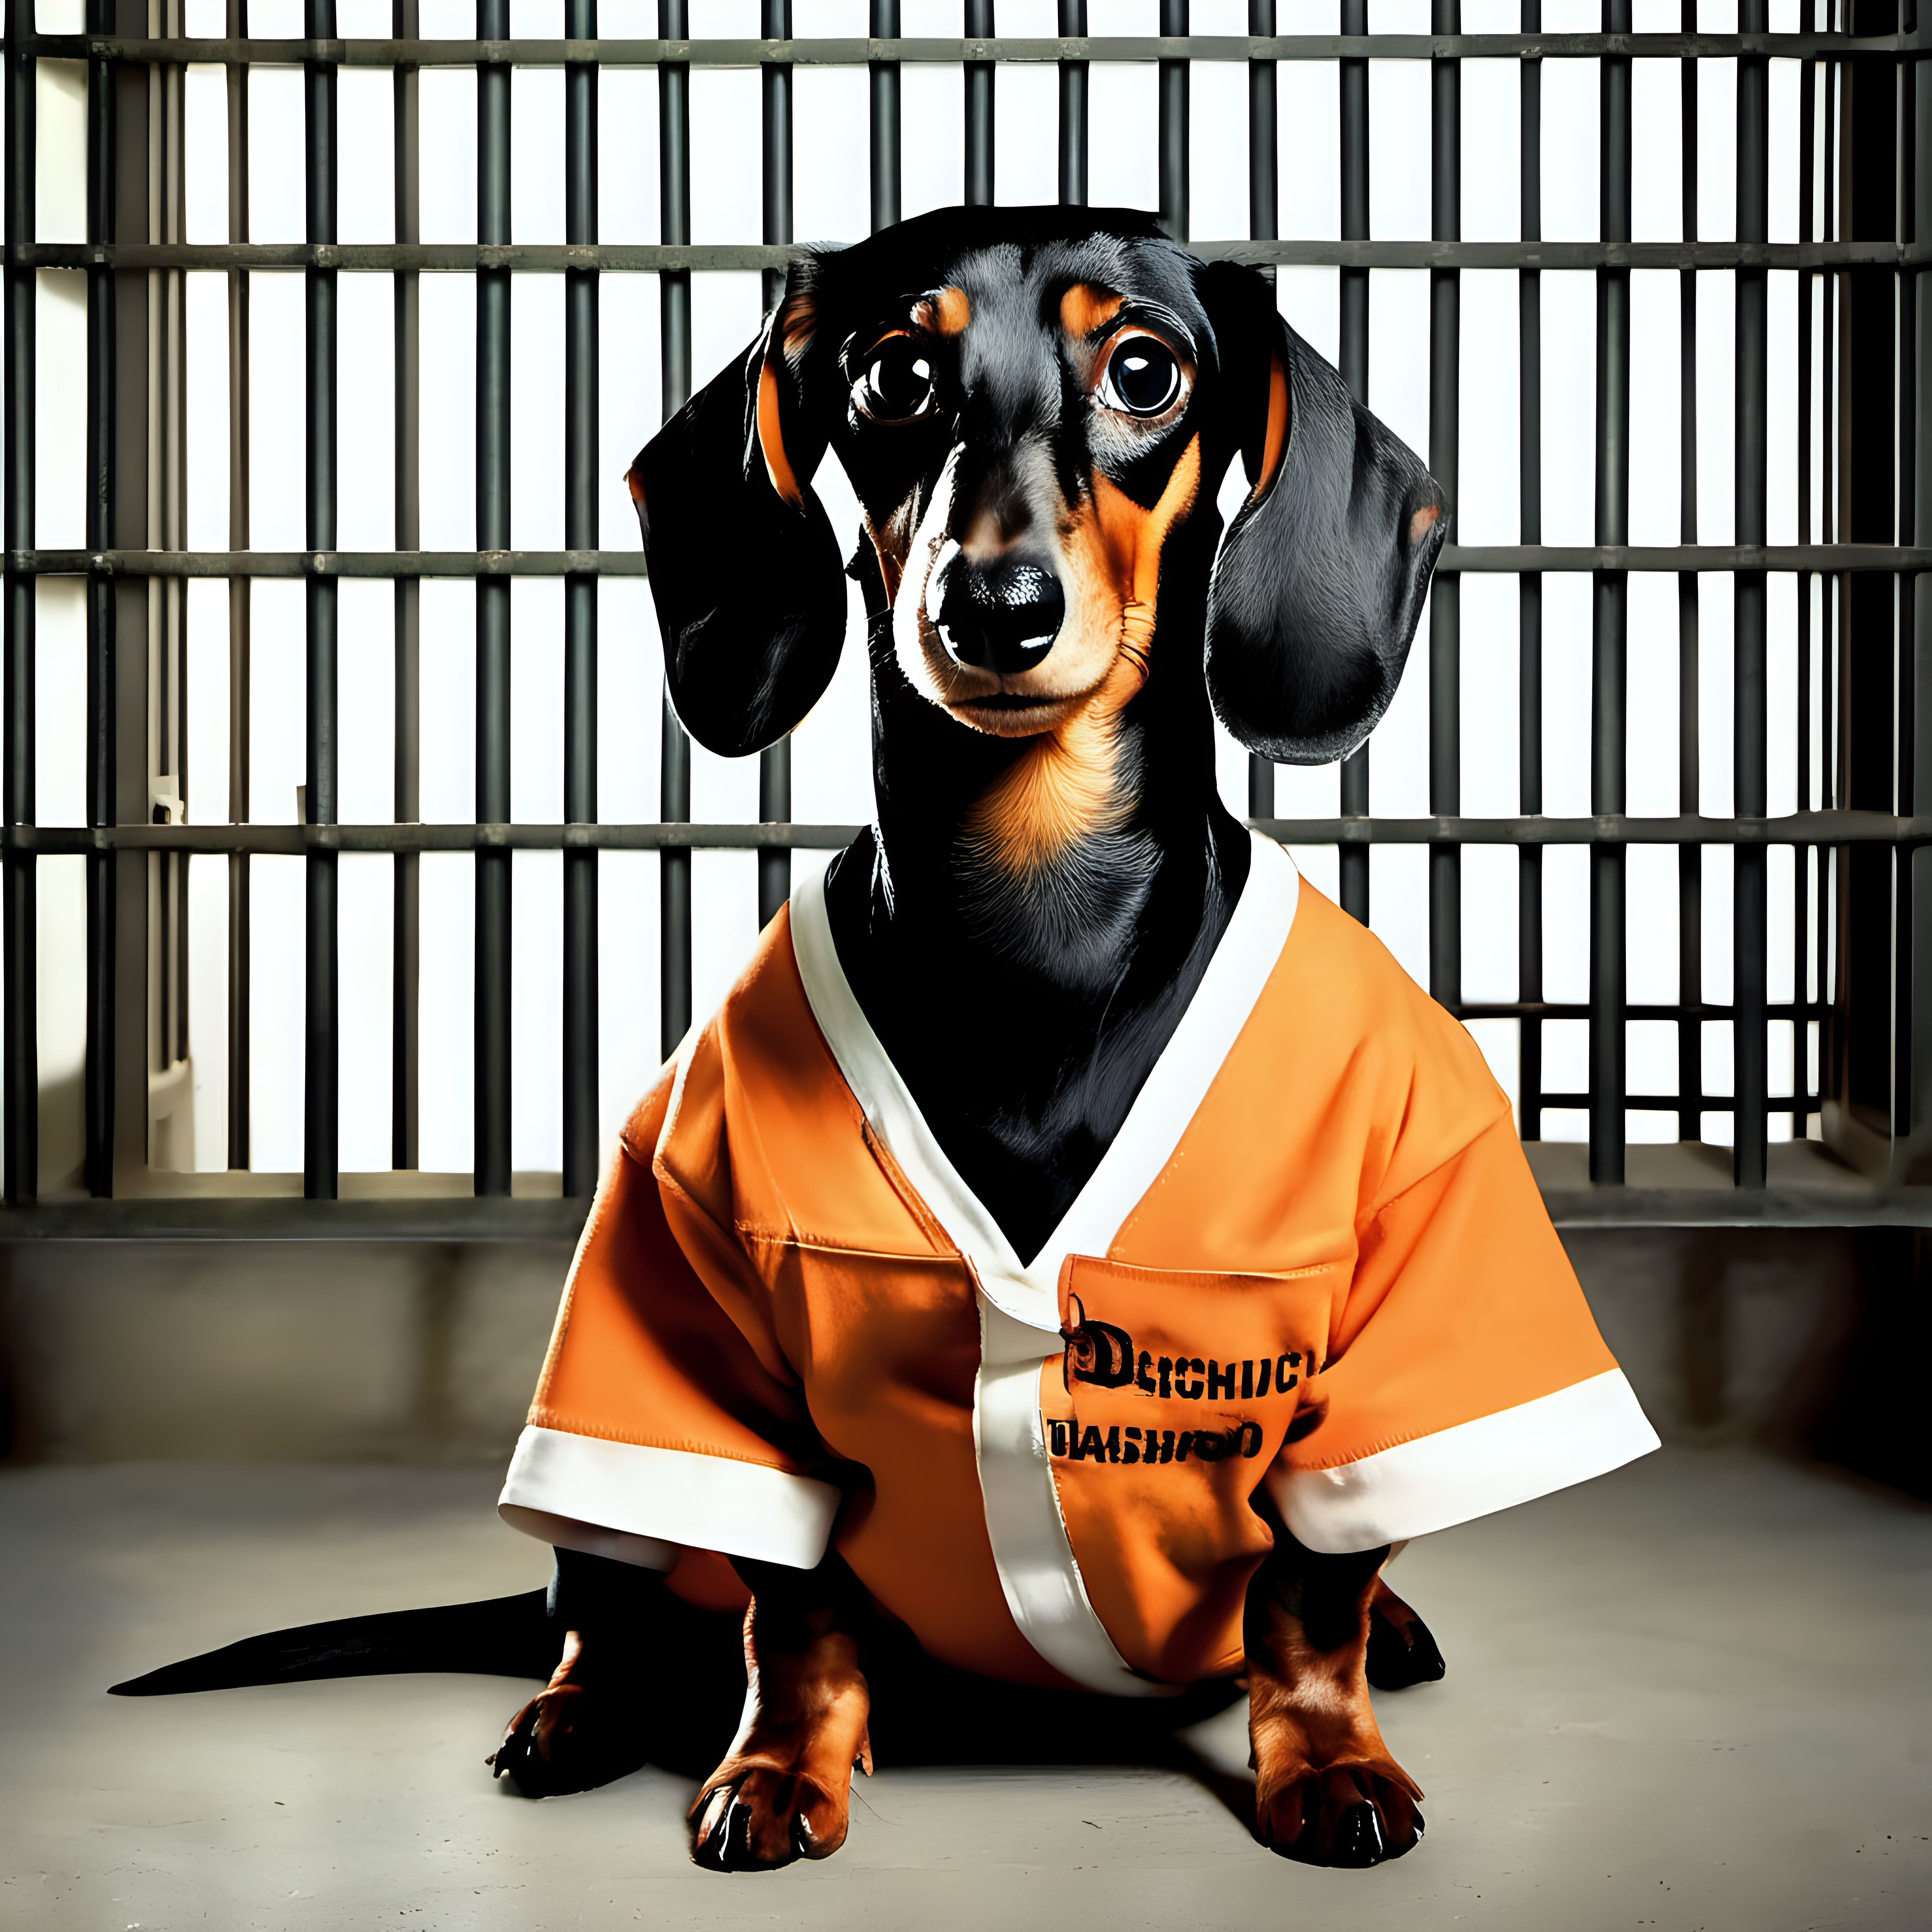 a black and tan Dachshund in prison garb